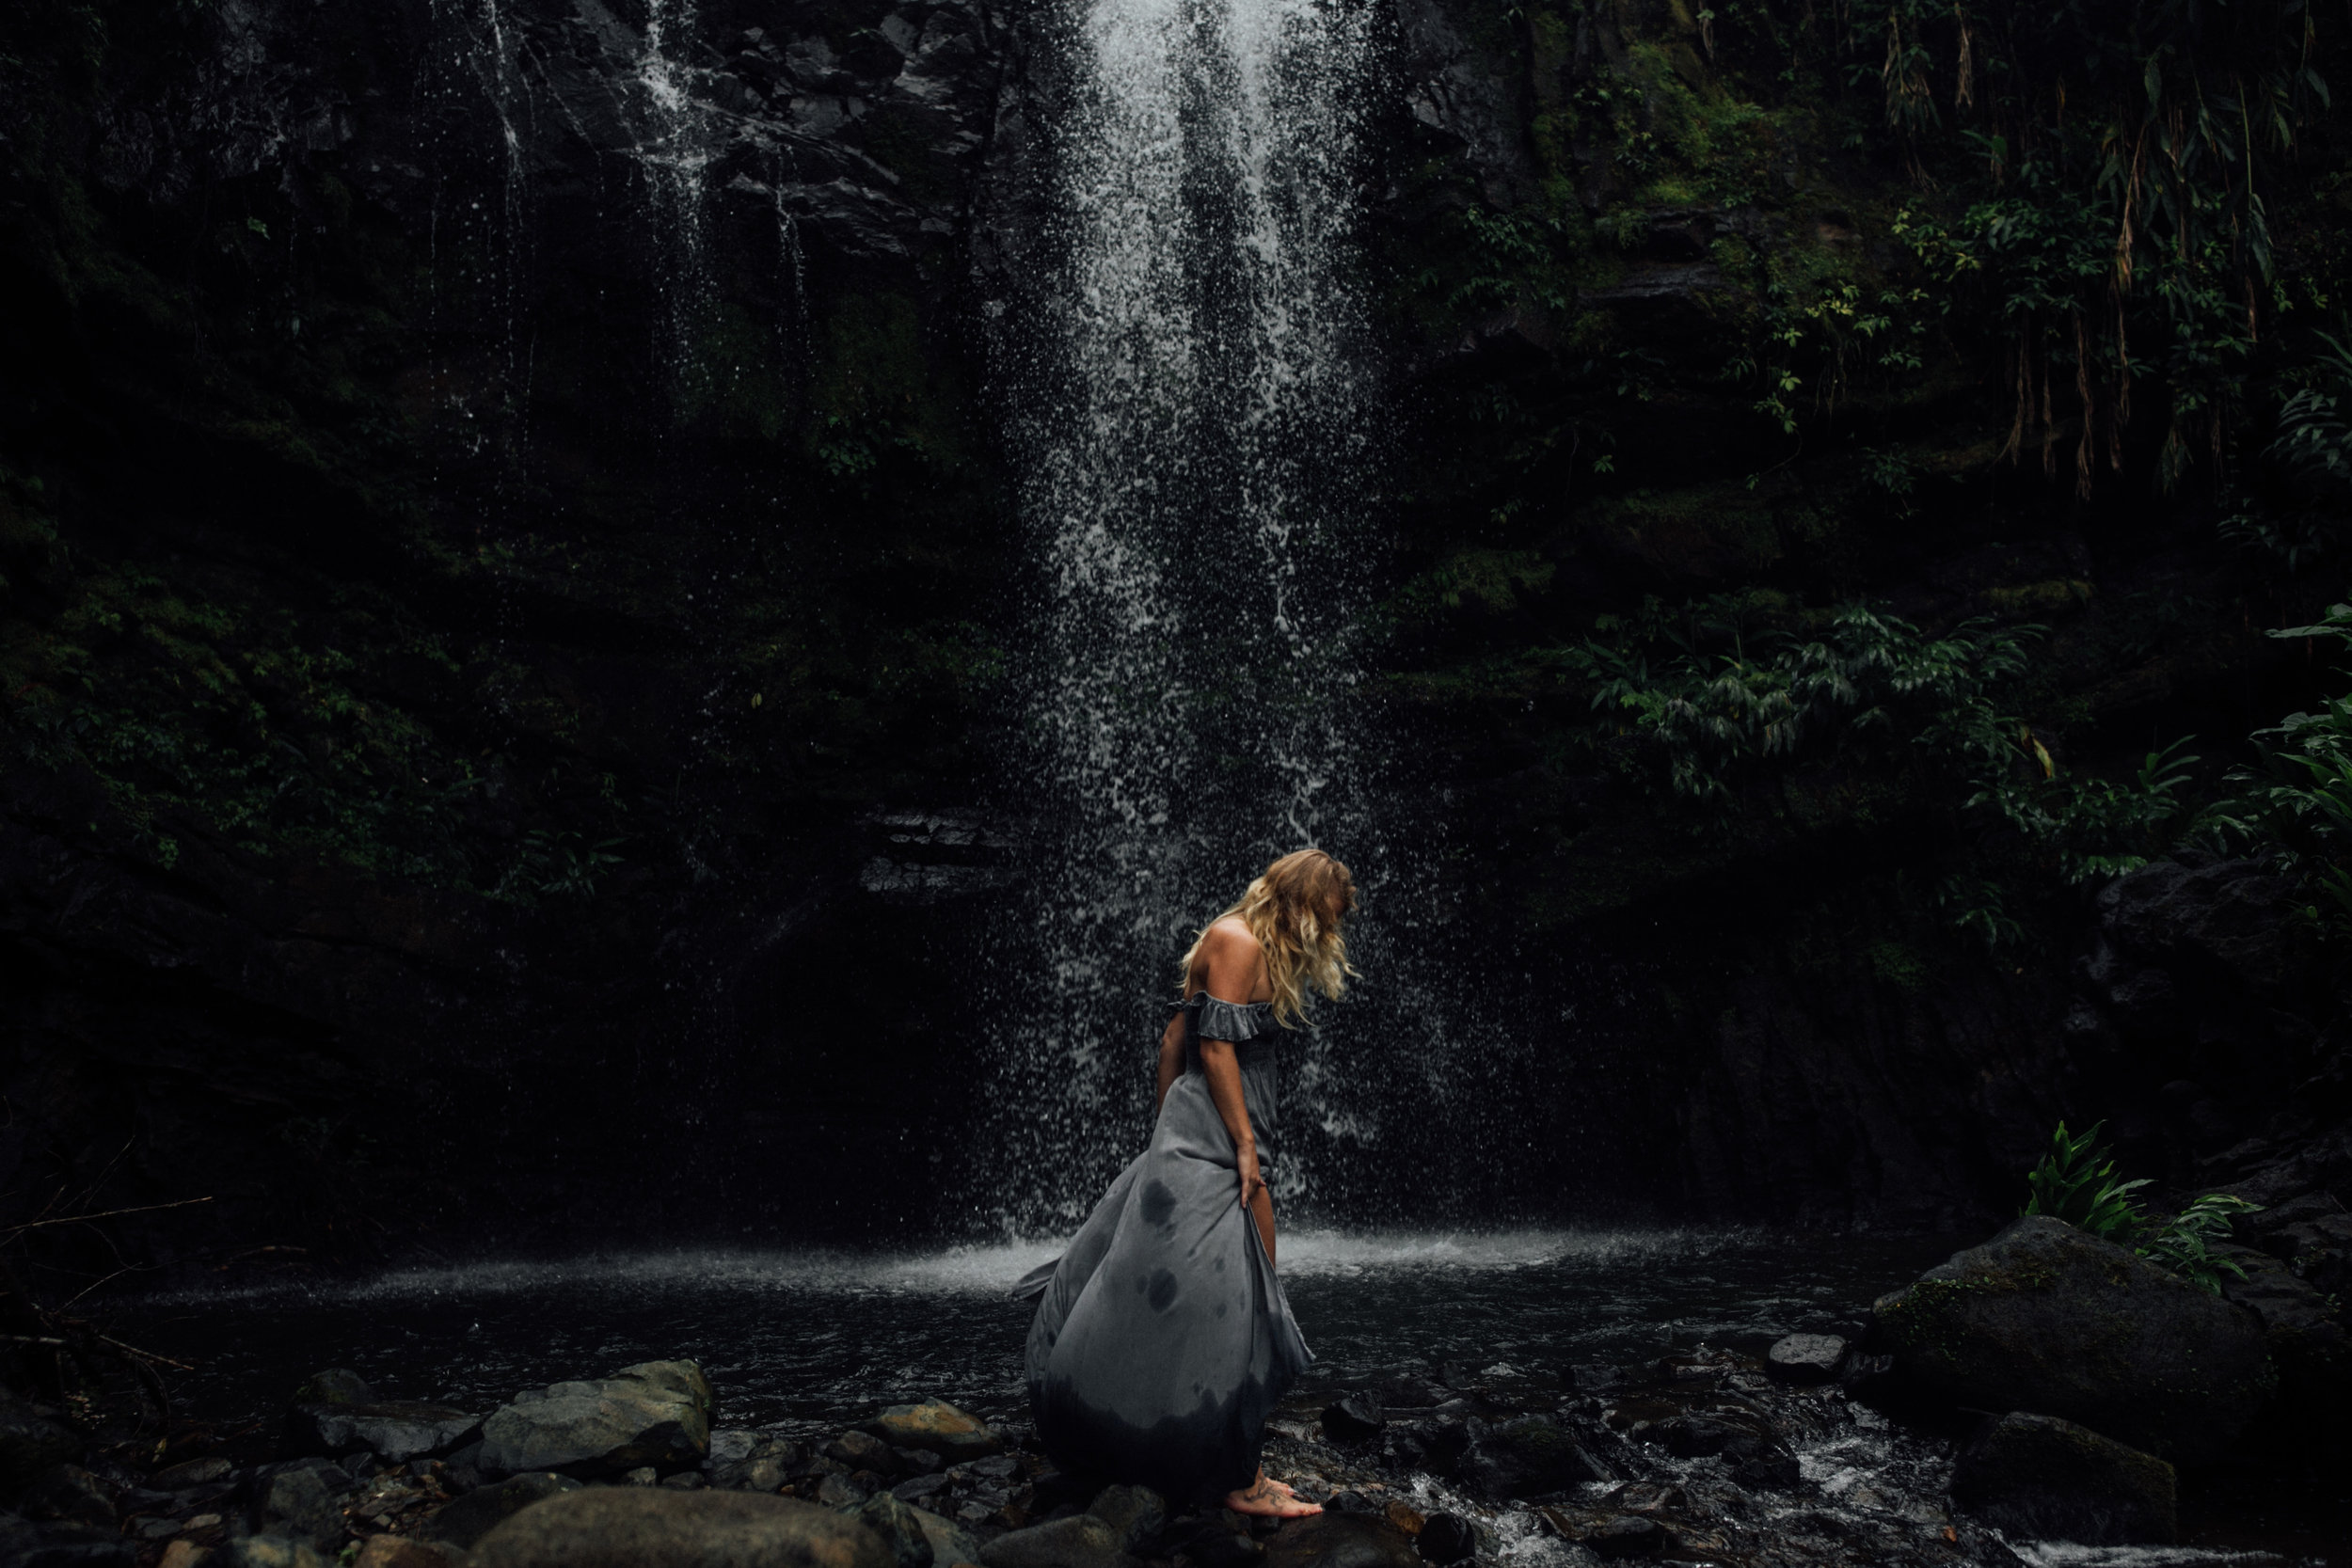 waterfall-self-10.jpg